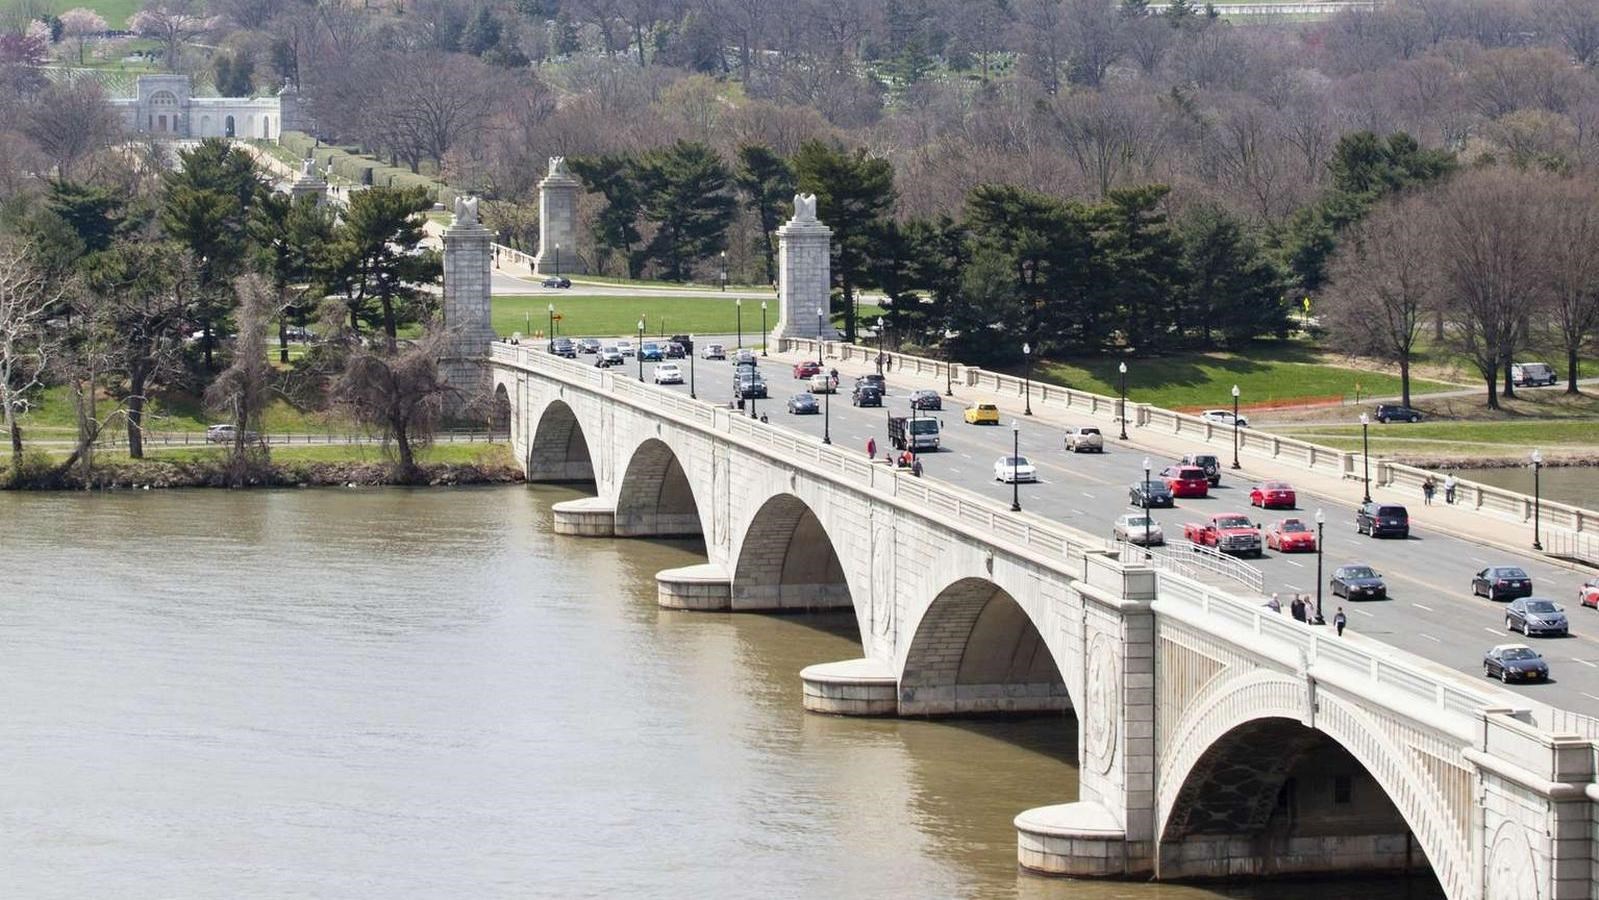 Arlington Memorial Bridge crosses over the Potomac, several cars drive across it.